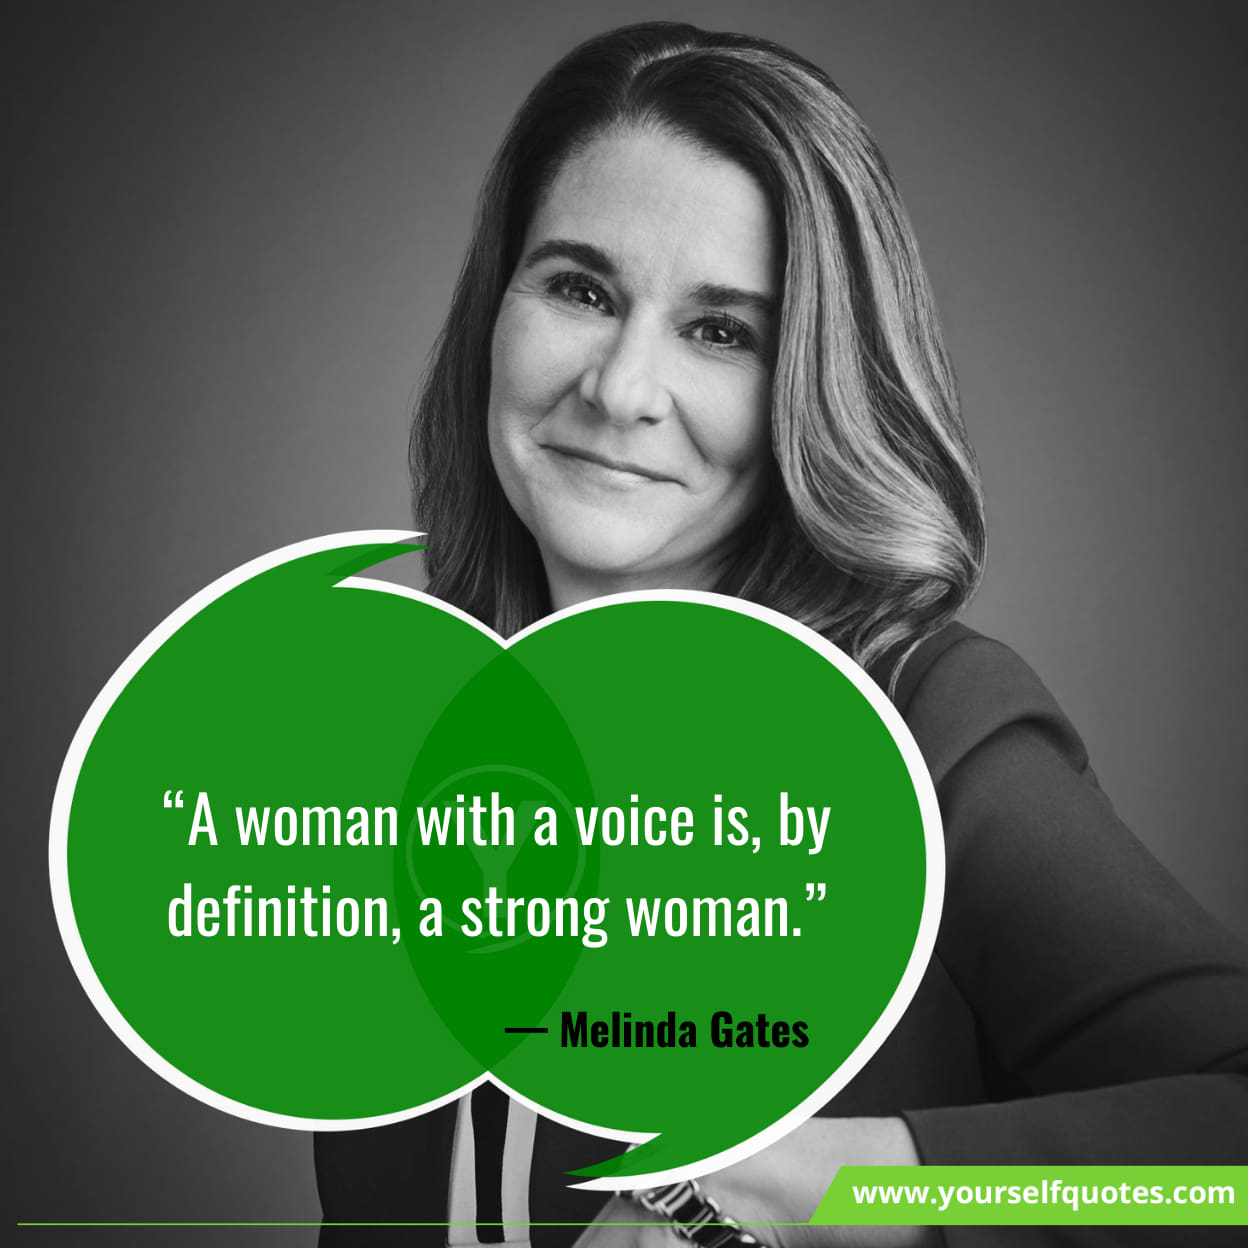 Empowering Feminist Quotes from Inspiring Women